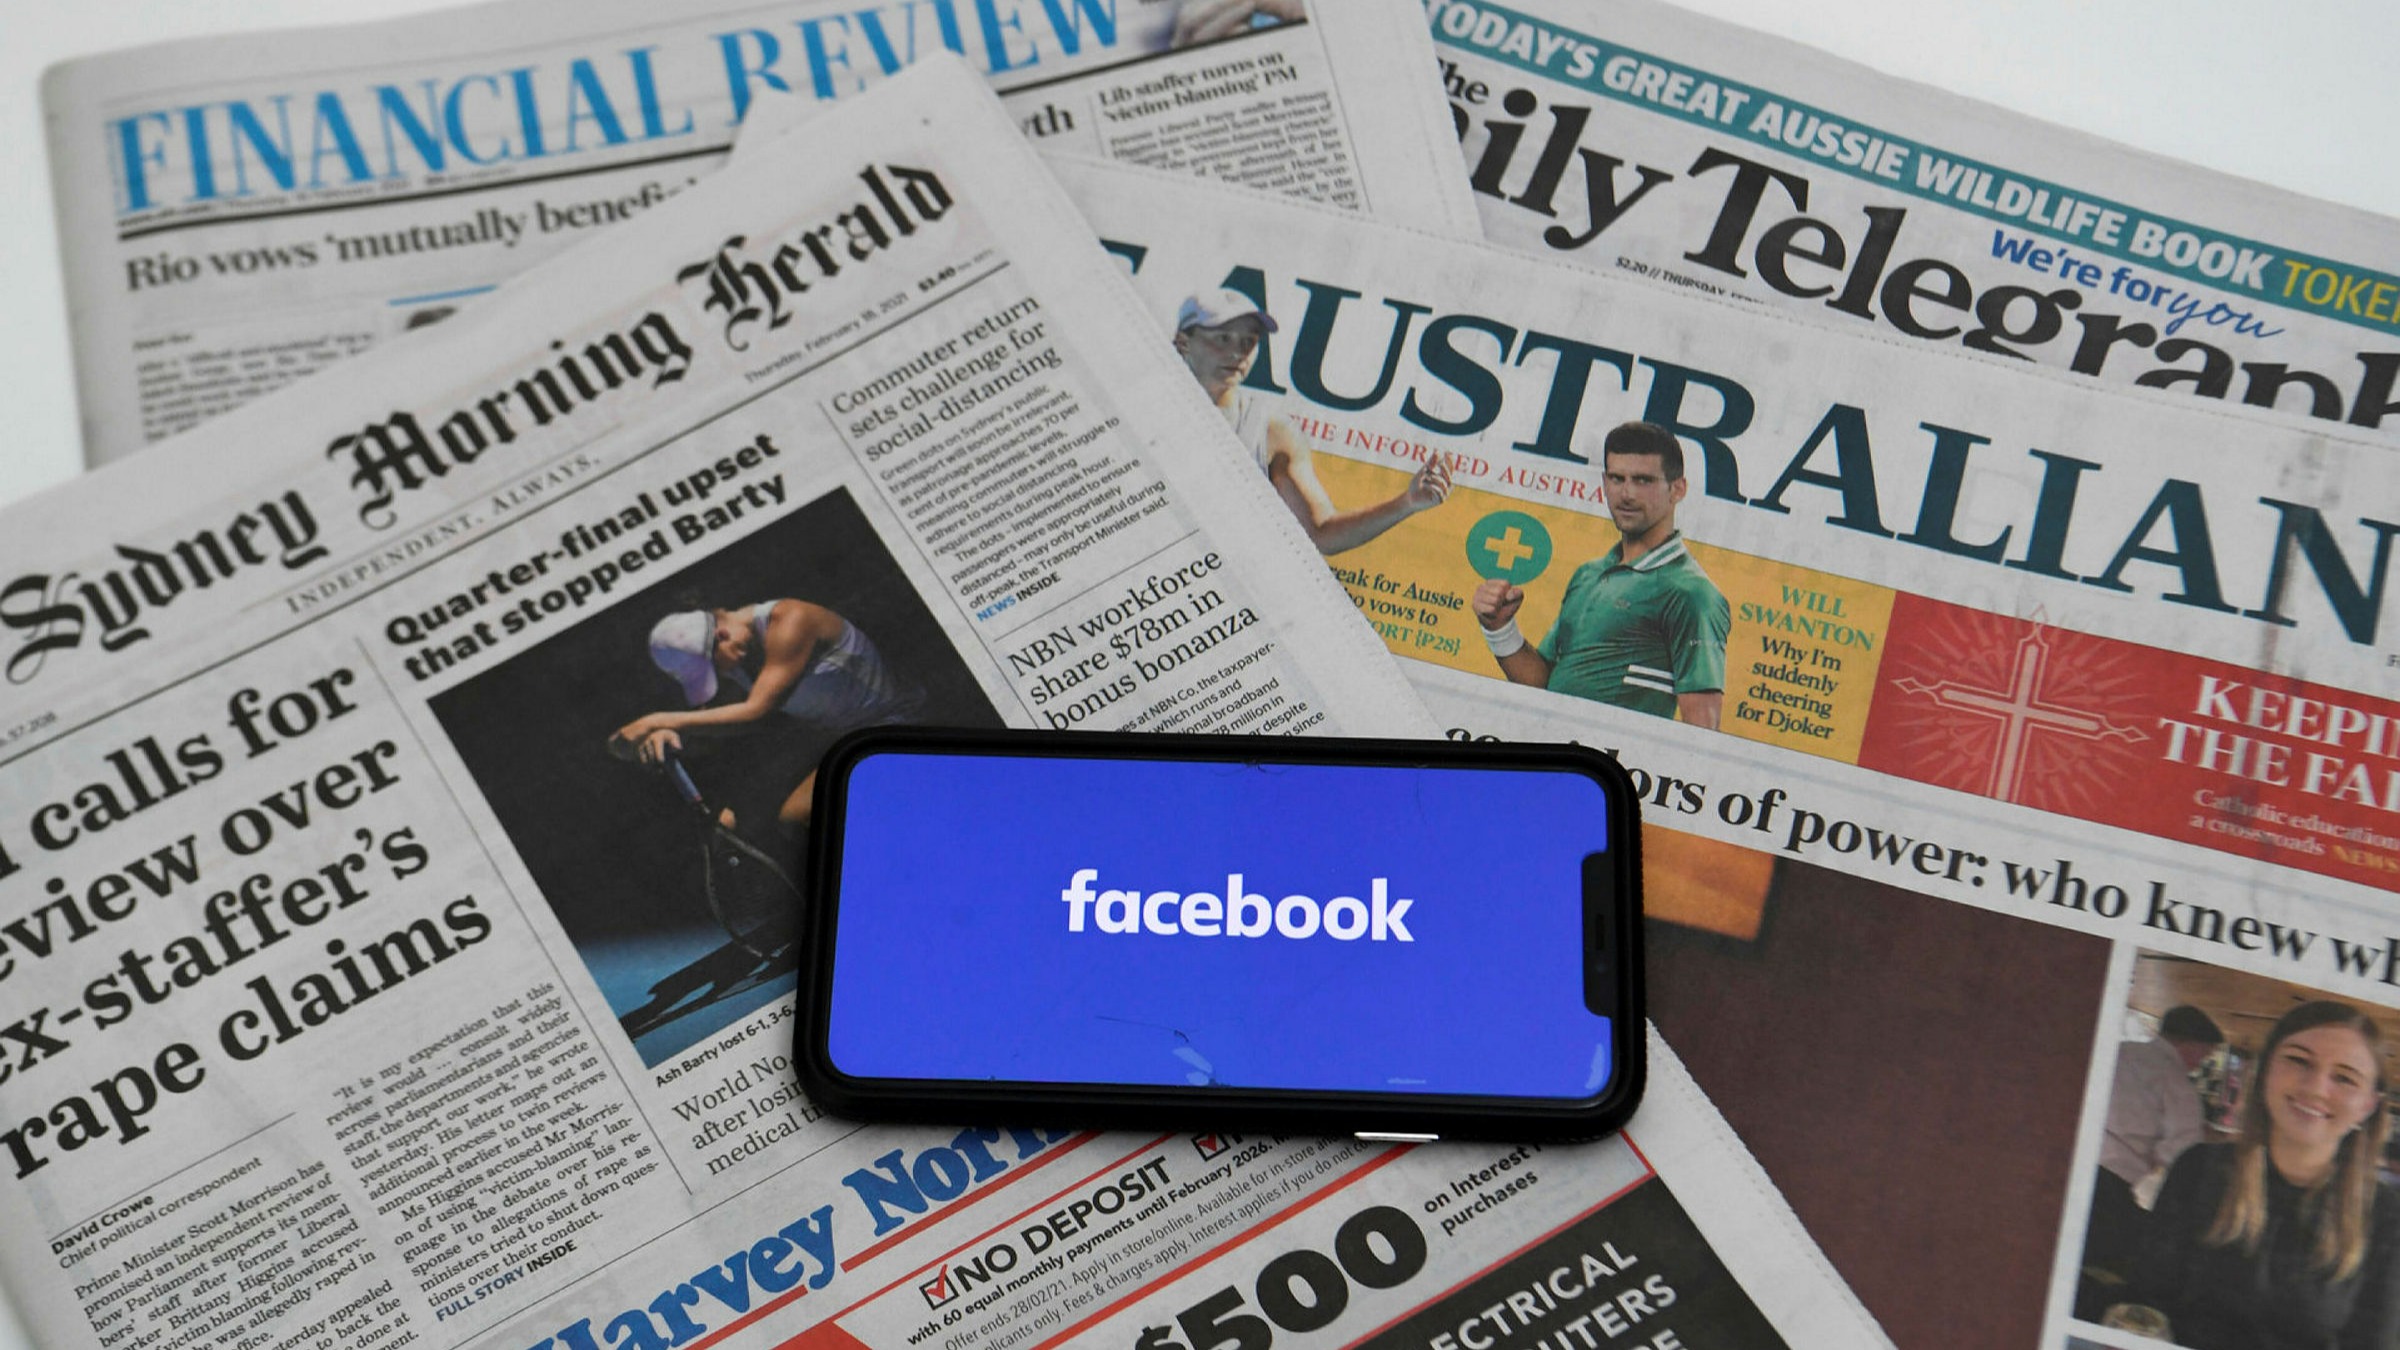 anspore Svin næve Facebook ban on news in Australia provokes fierce backlash | Financial Times